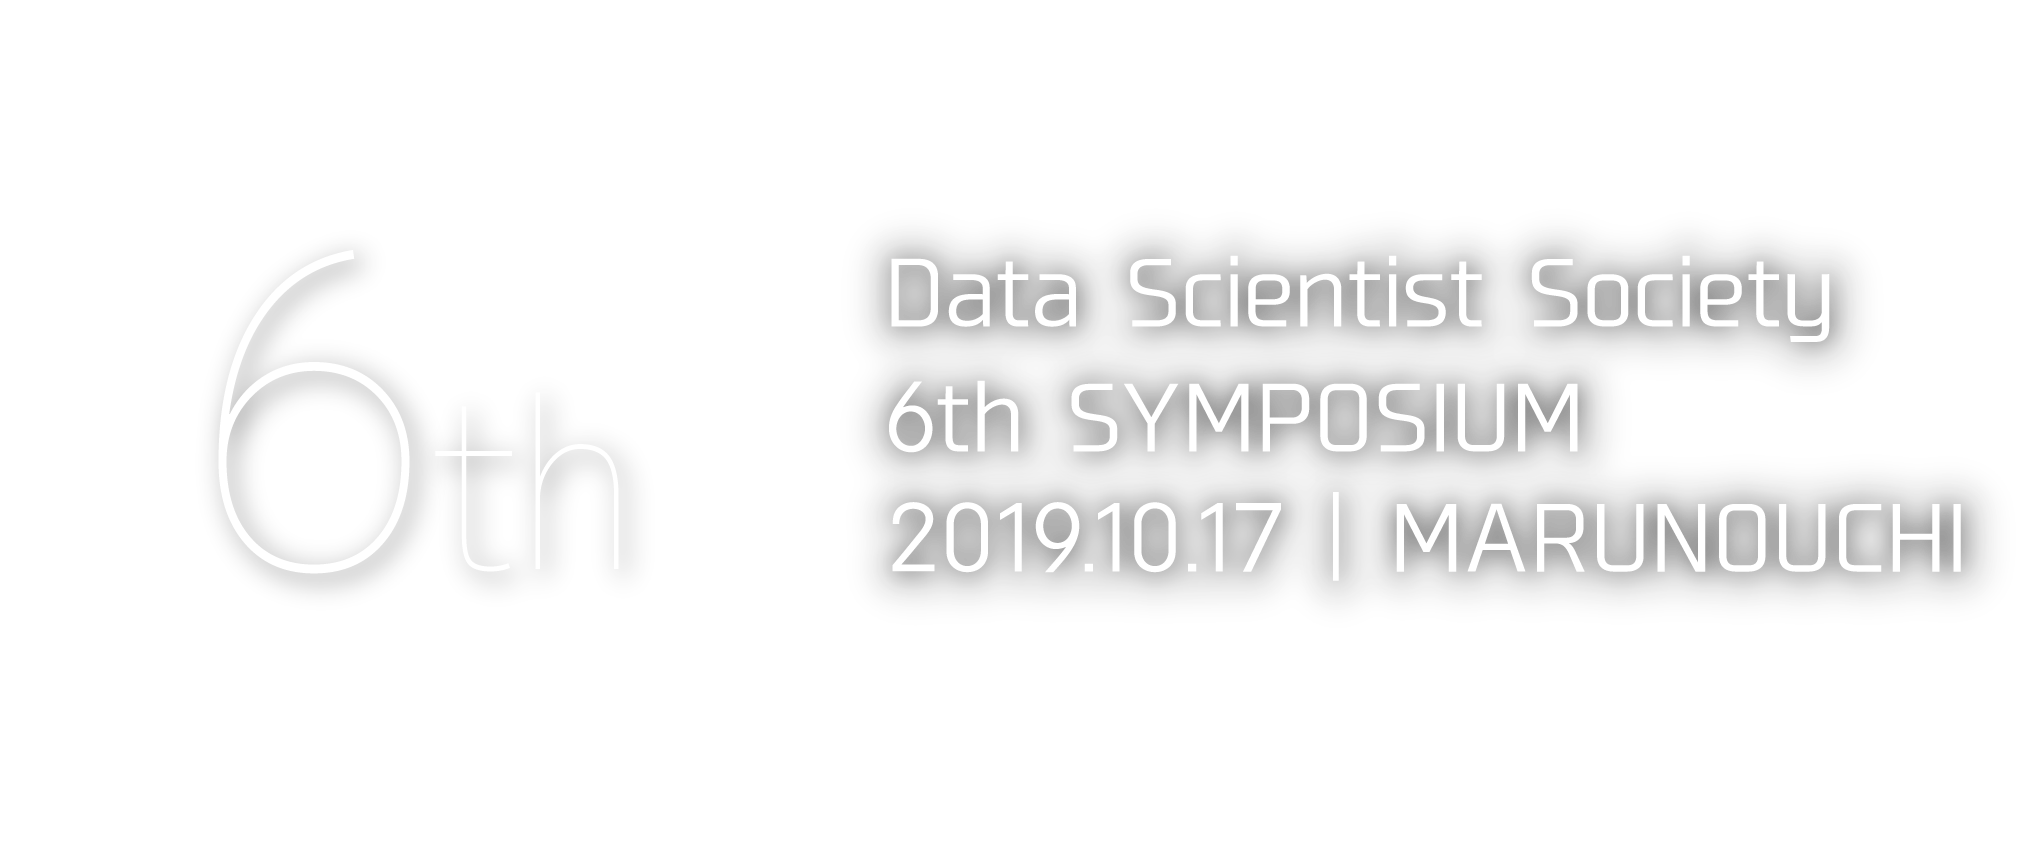 DataScientis Society SYMPOSIUM 6th 2019.10.17